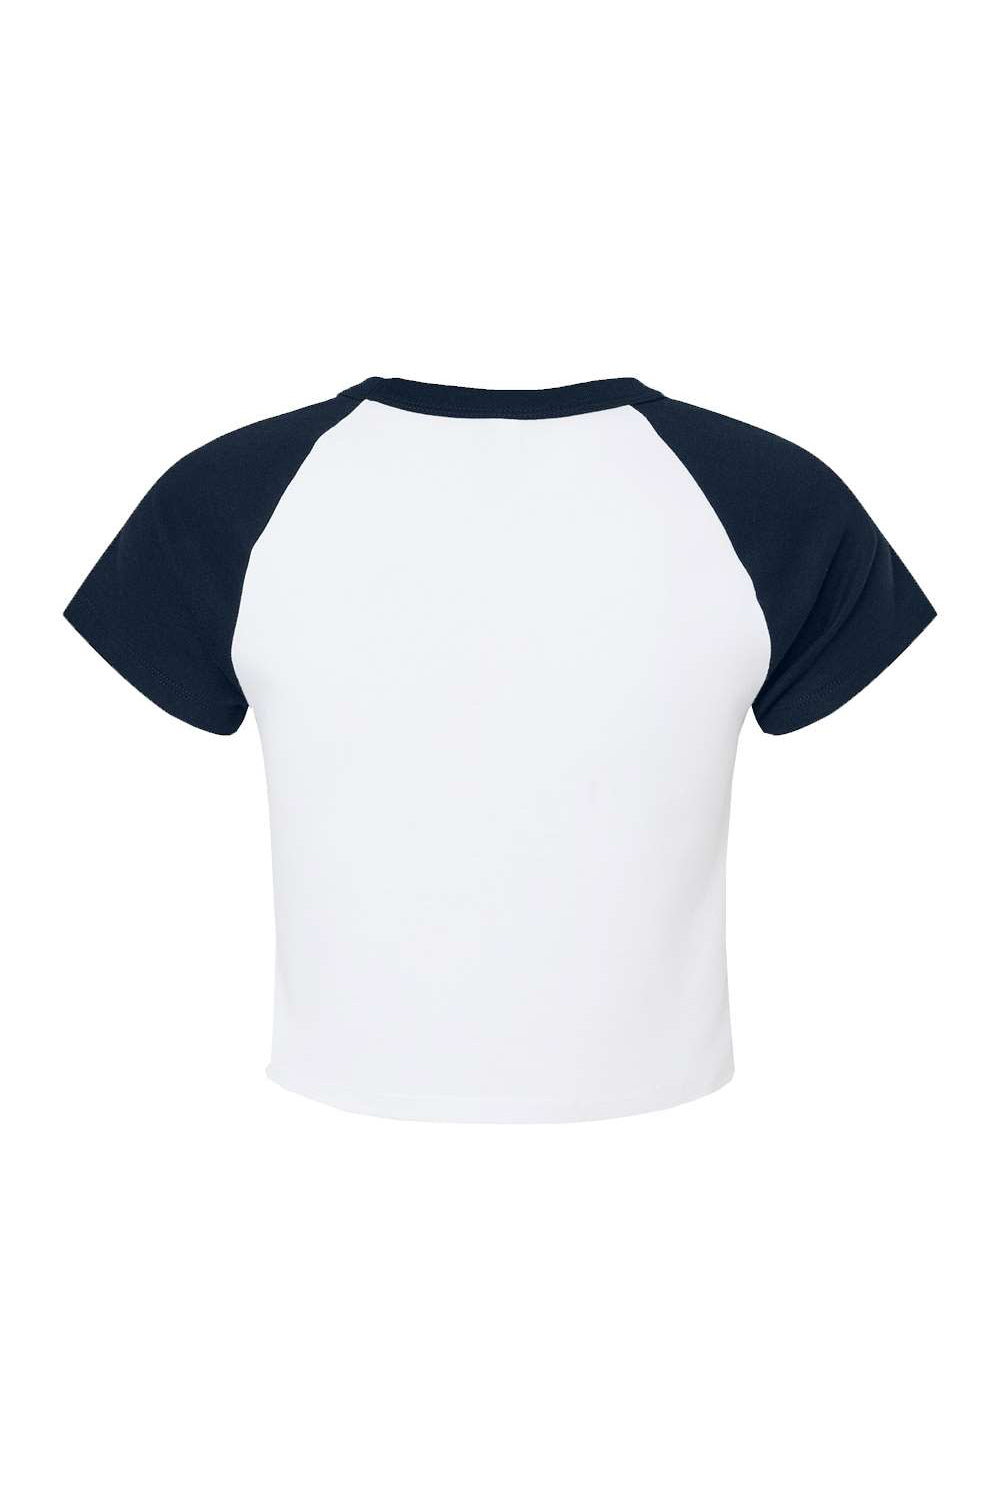 Bella + Canvas 1201 Womens Micro Ribbed Raglan Short Sleeve Crewneck Baby T-Shirt White/Navy Blue Flat Back